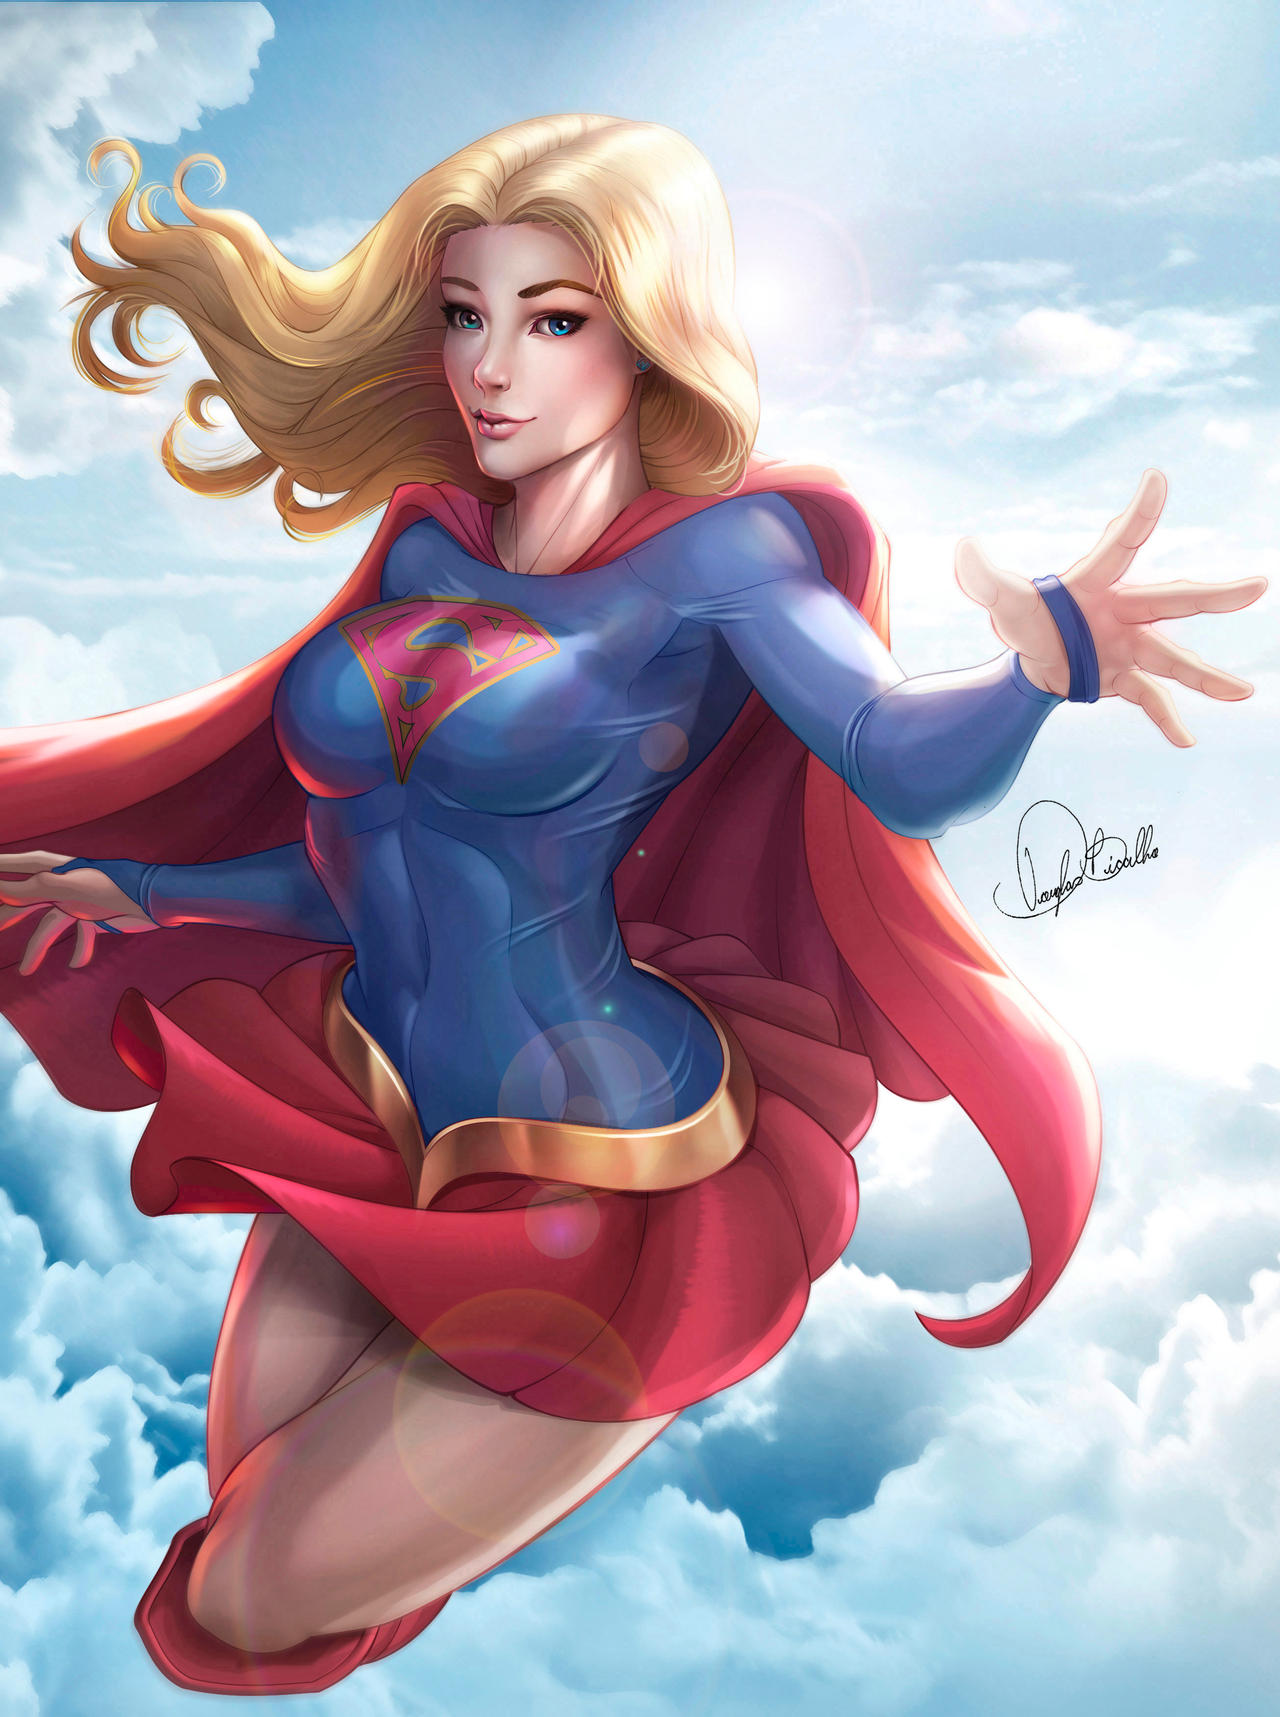 Supergirl Fan Art By Dziqker On Deviantart free images, download Supergirl Fan...